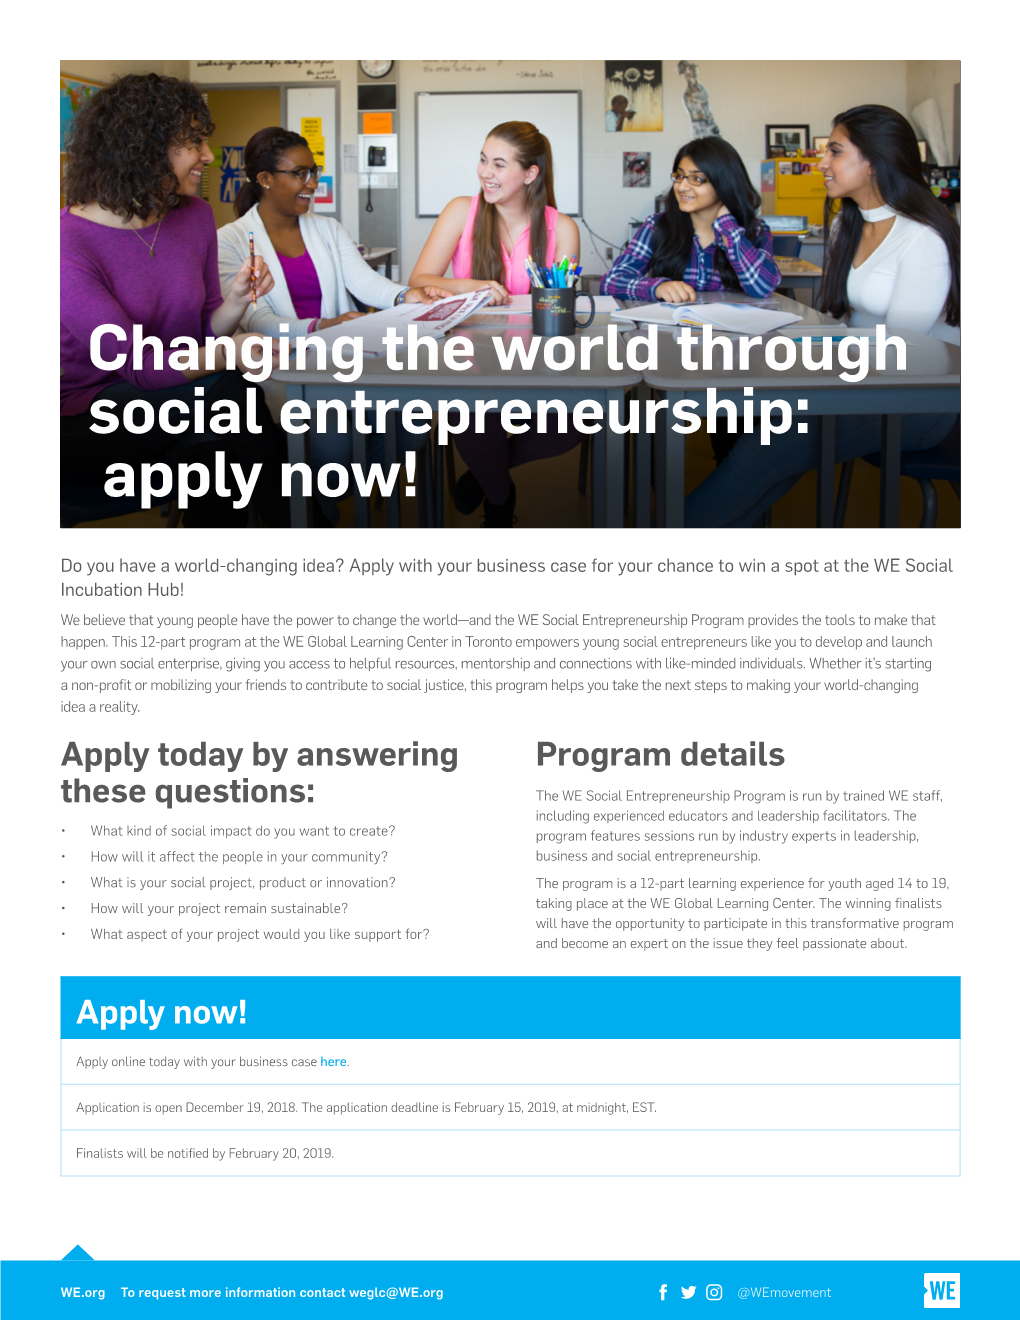 Changing the World Through Social Entrepreneurship: Apply Now!